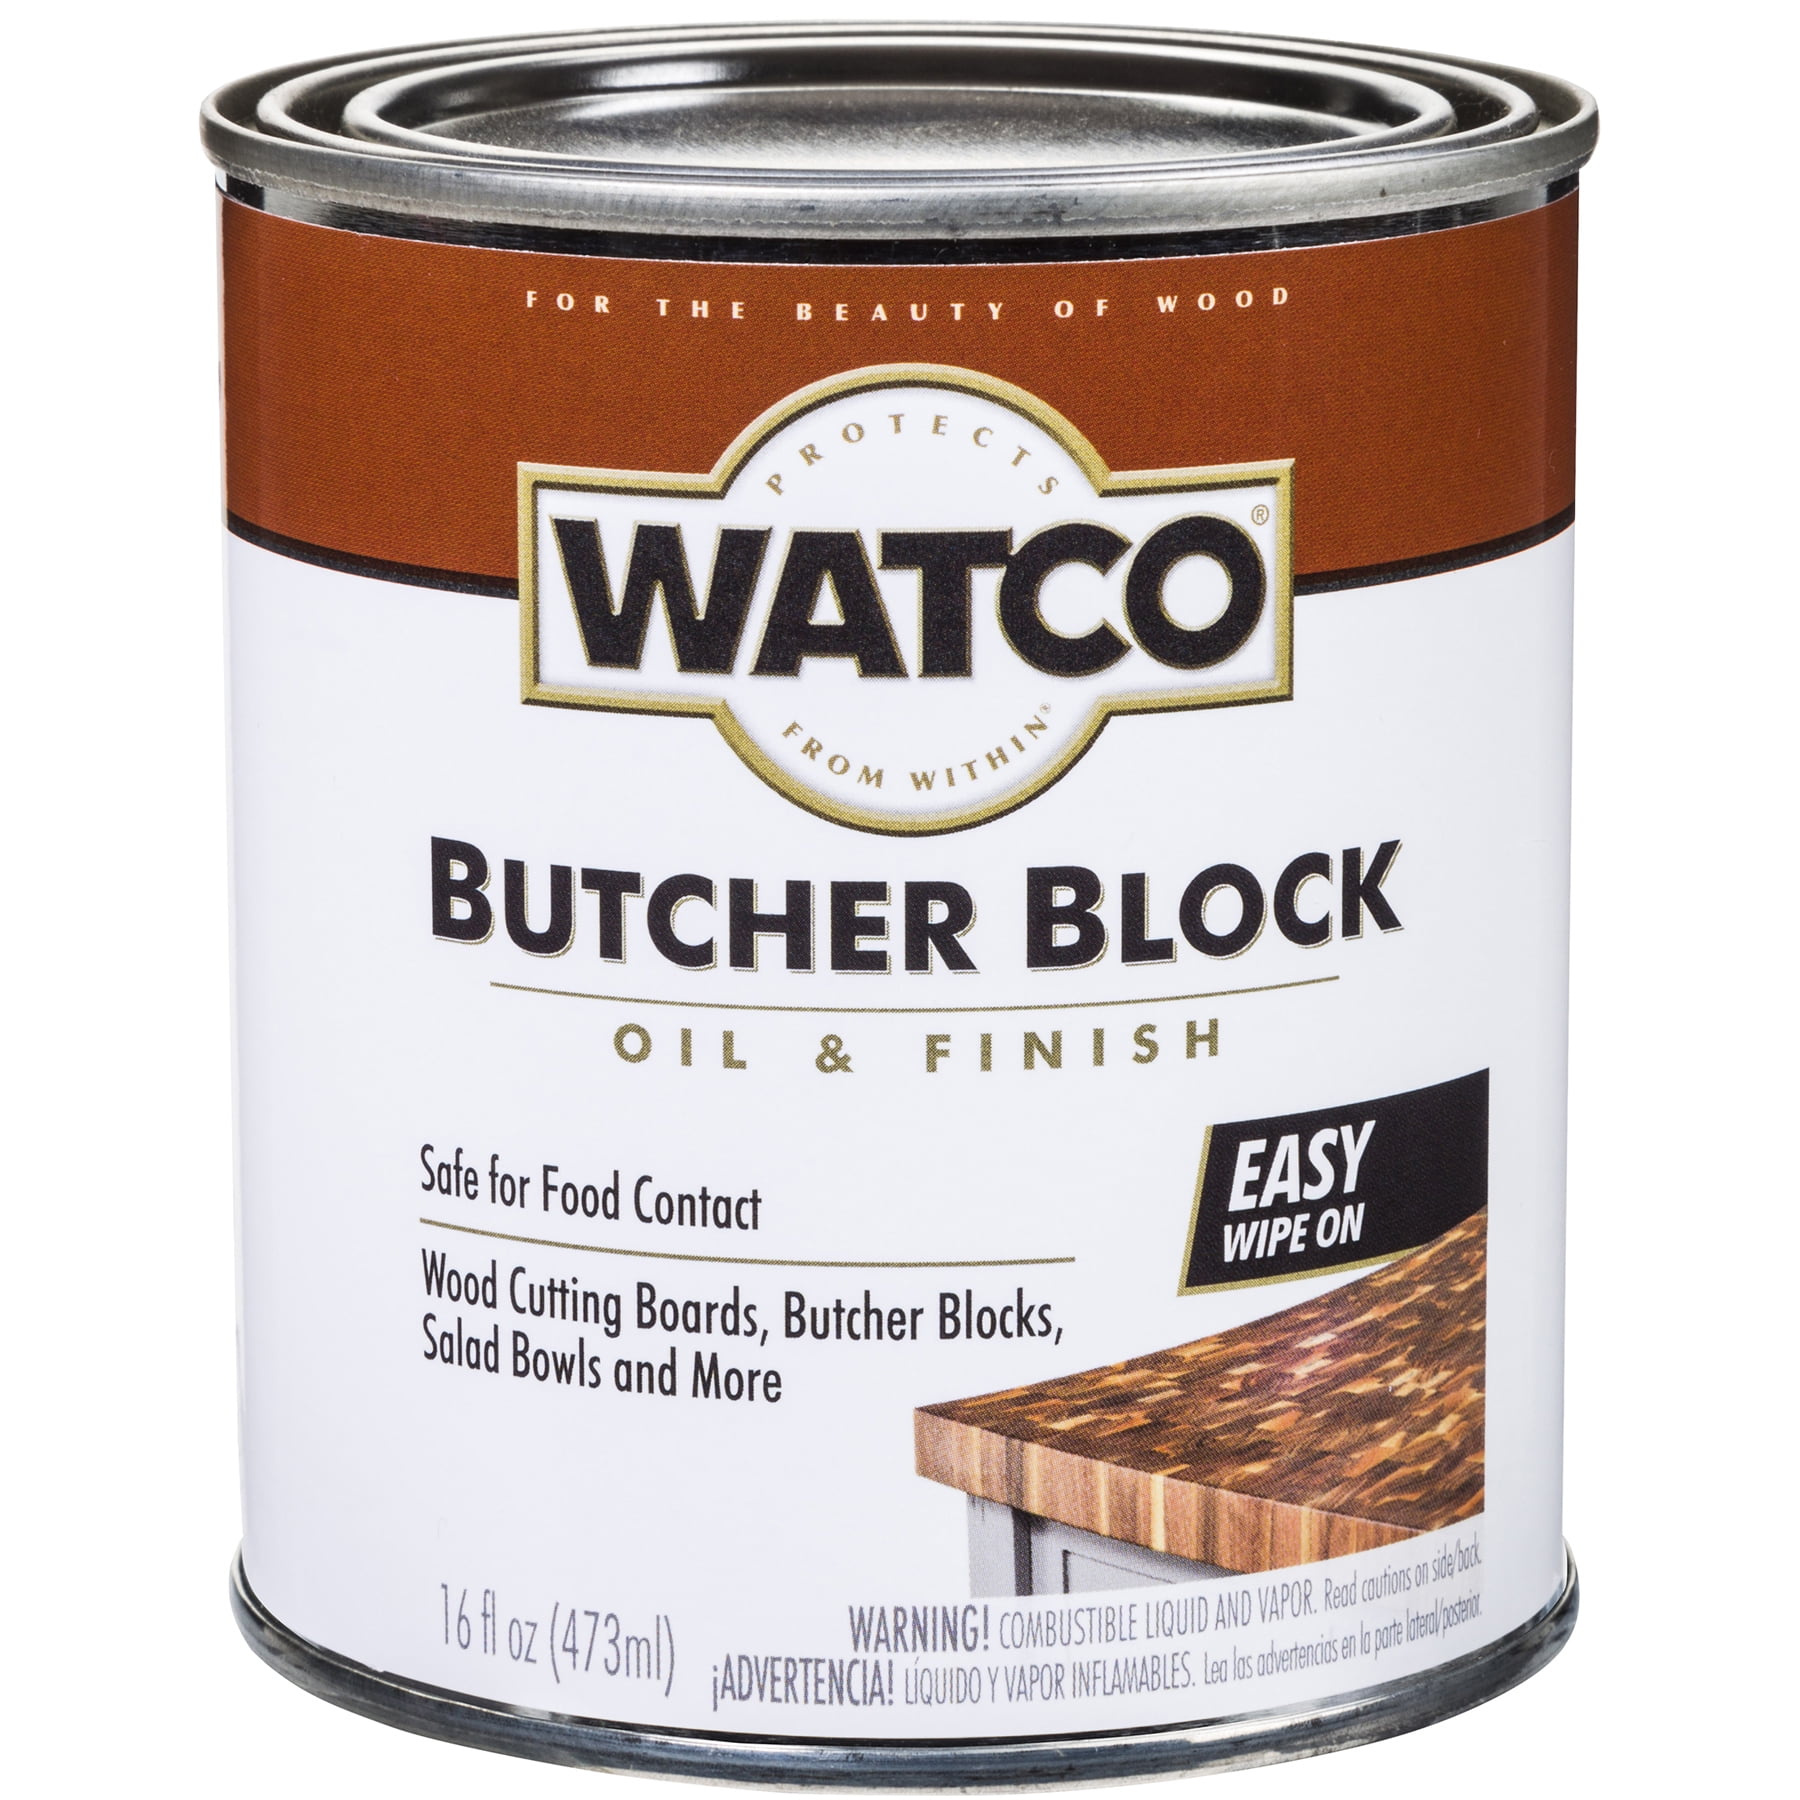  WuudCo Butcher Block Cutting Board